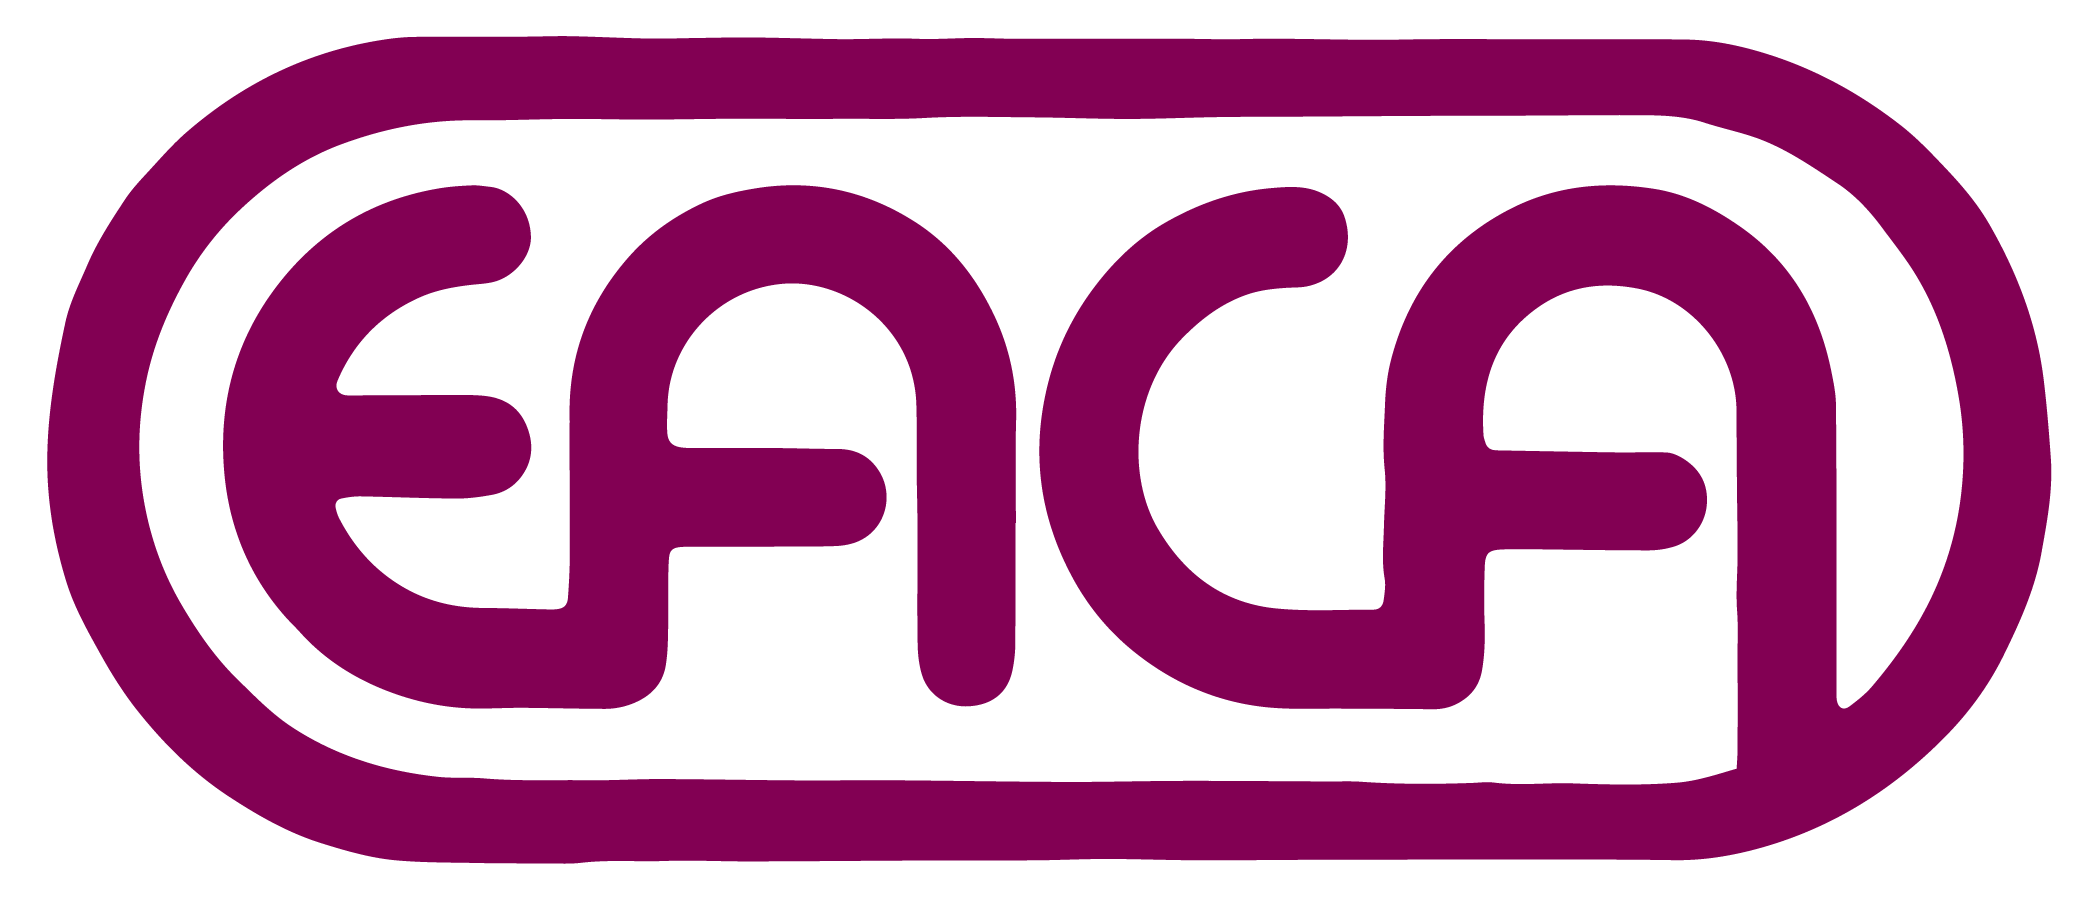 East Atlanta Community Association logo